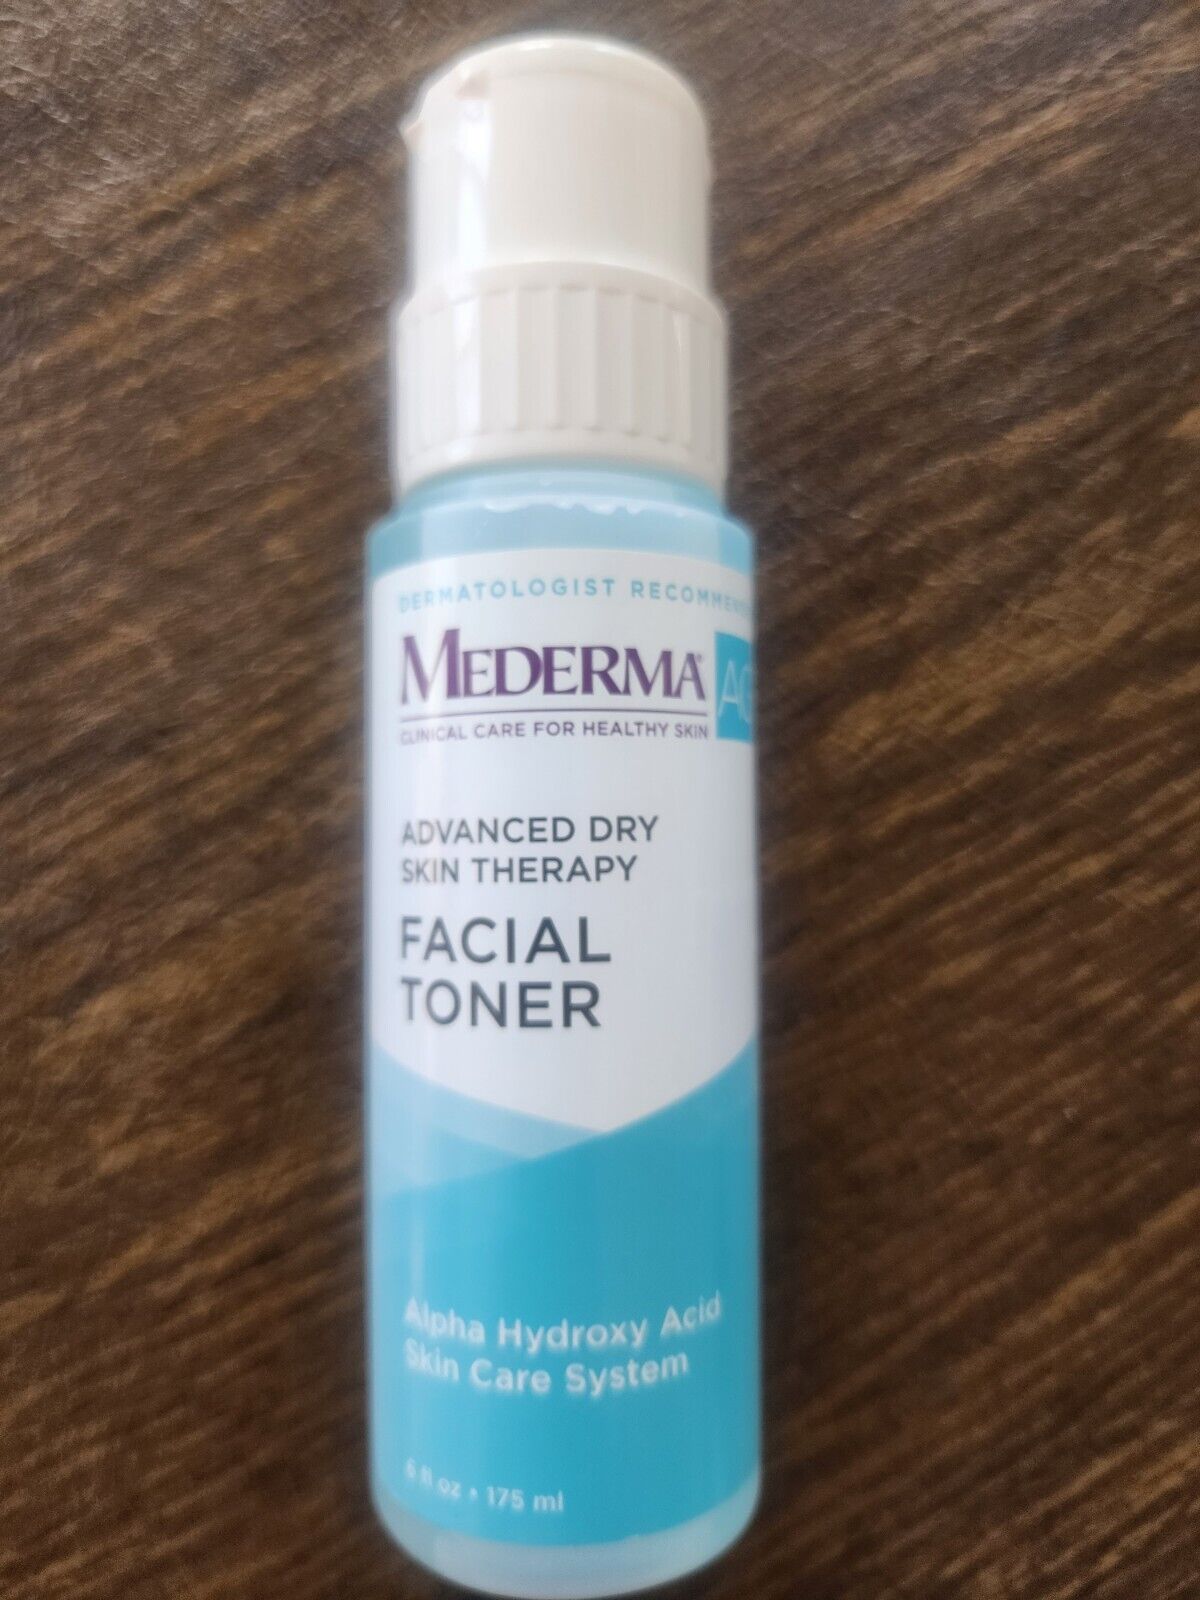 Mederma AG Facial TONER Advanced Dry Skin Therapy 6 Fl Oz Alpha Hydroxy Care